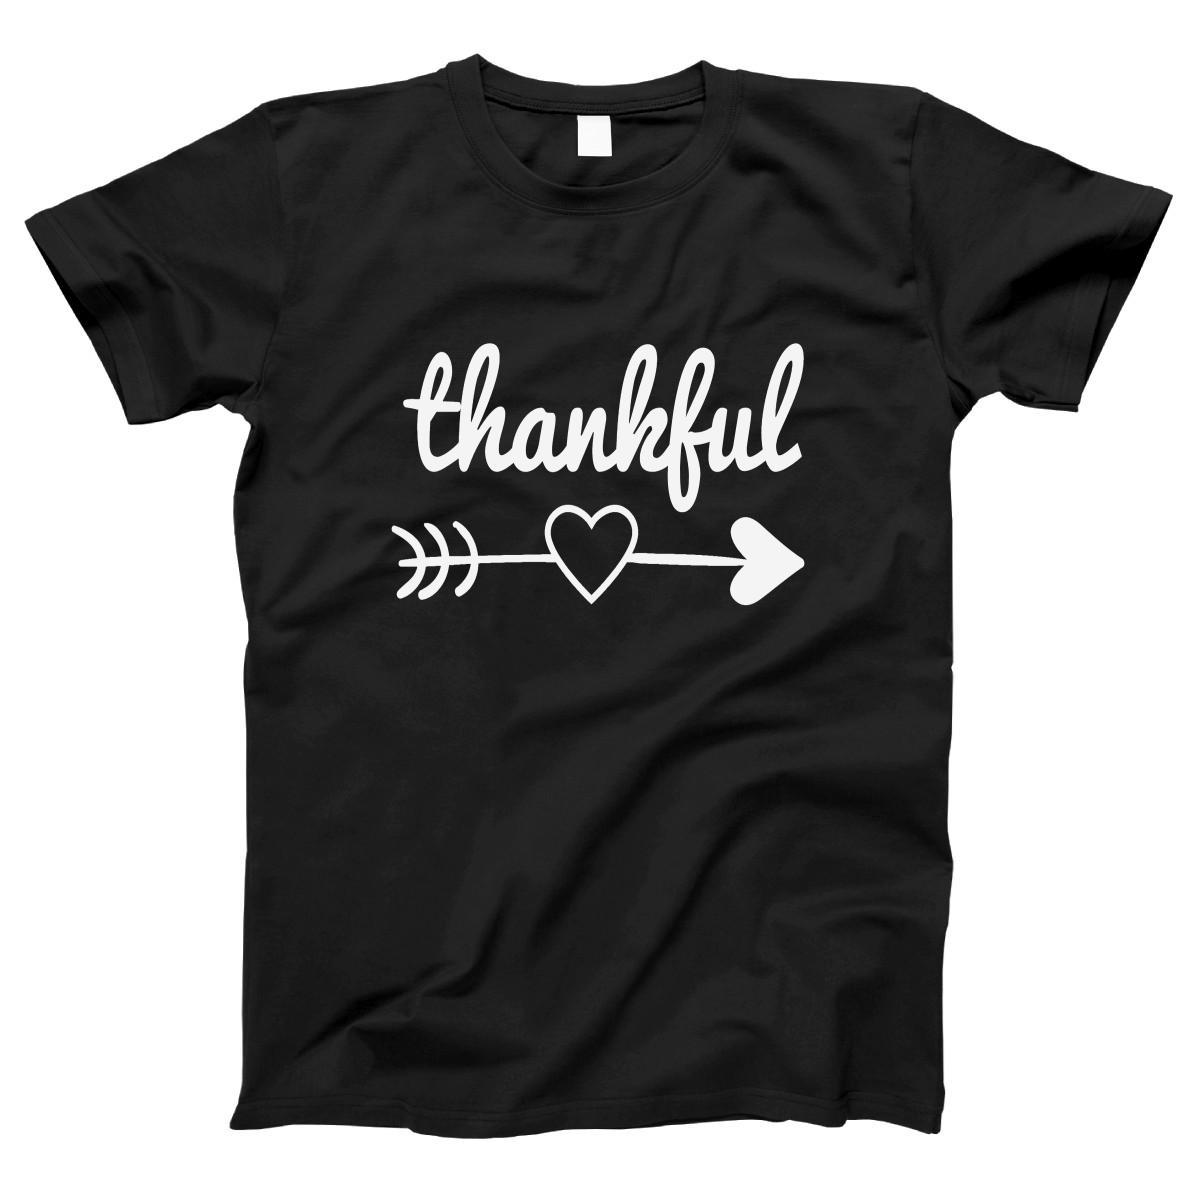 Thankful Heart Women's T-shirt | Black